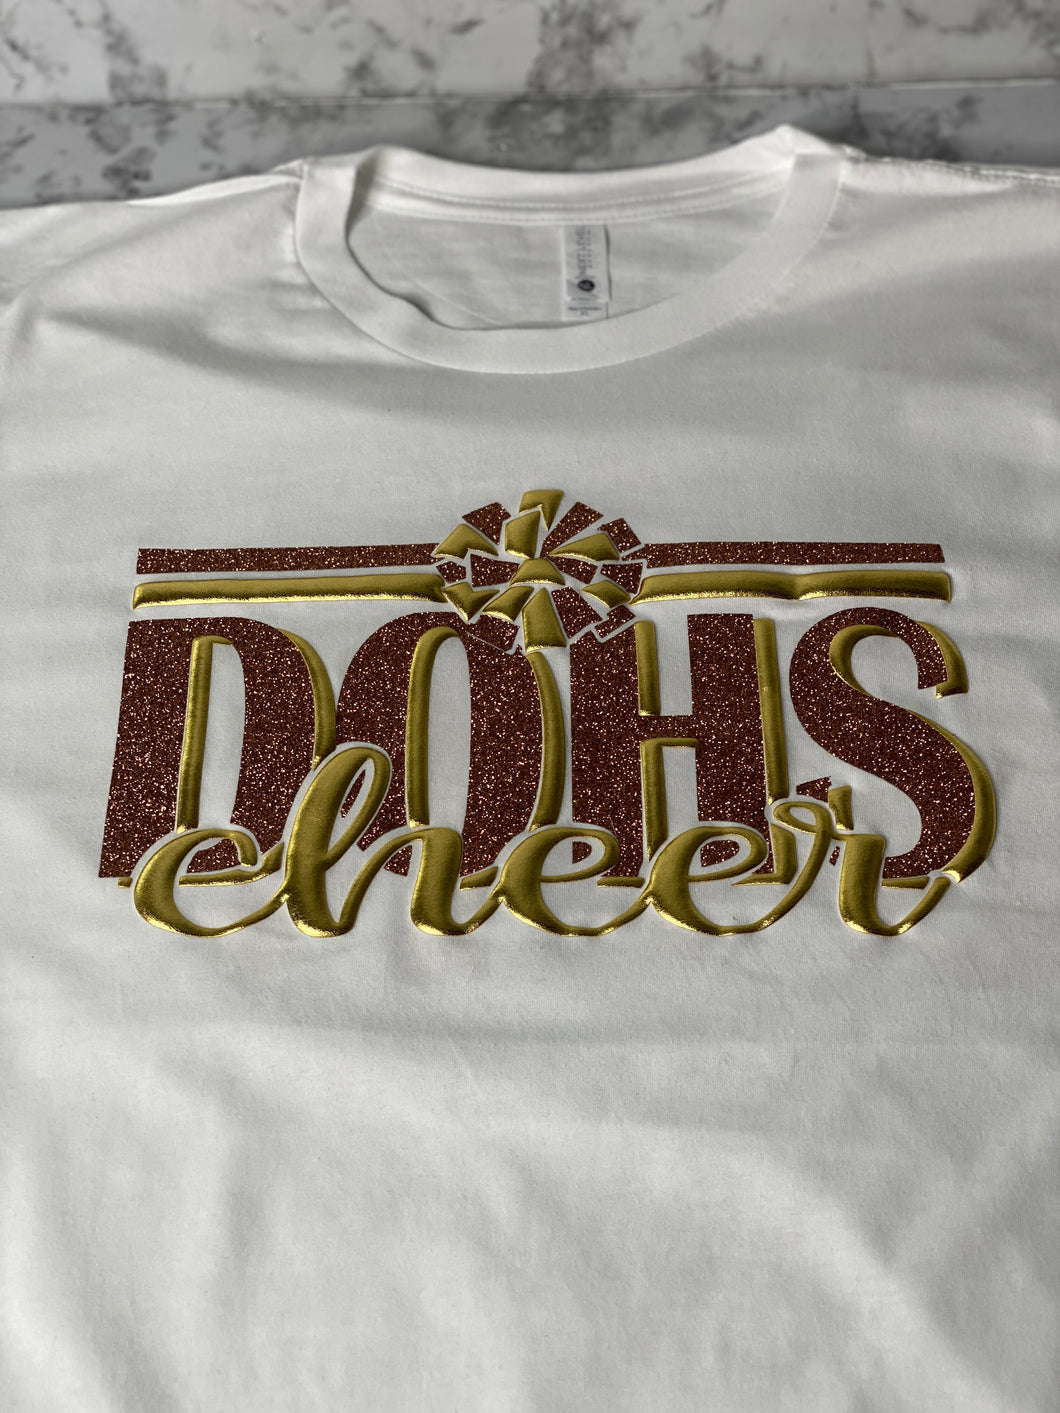 DOHS Cheer Shirt (custom)